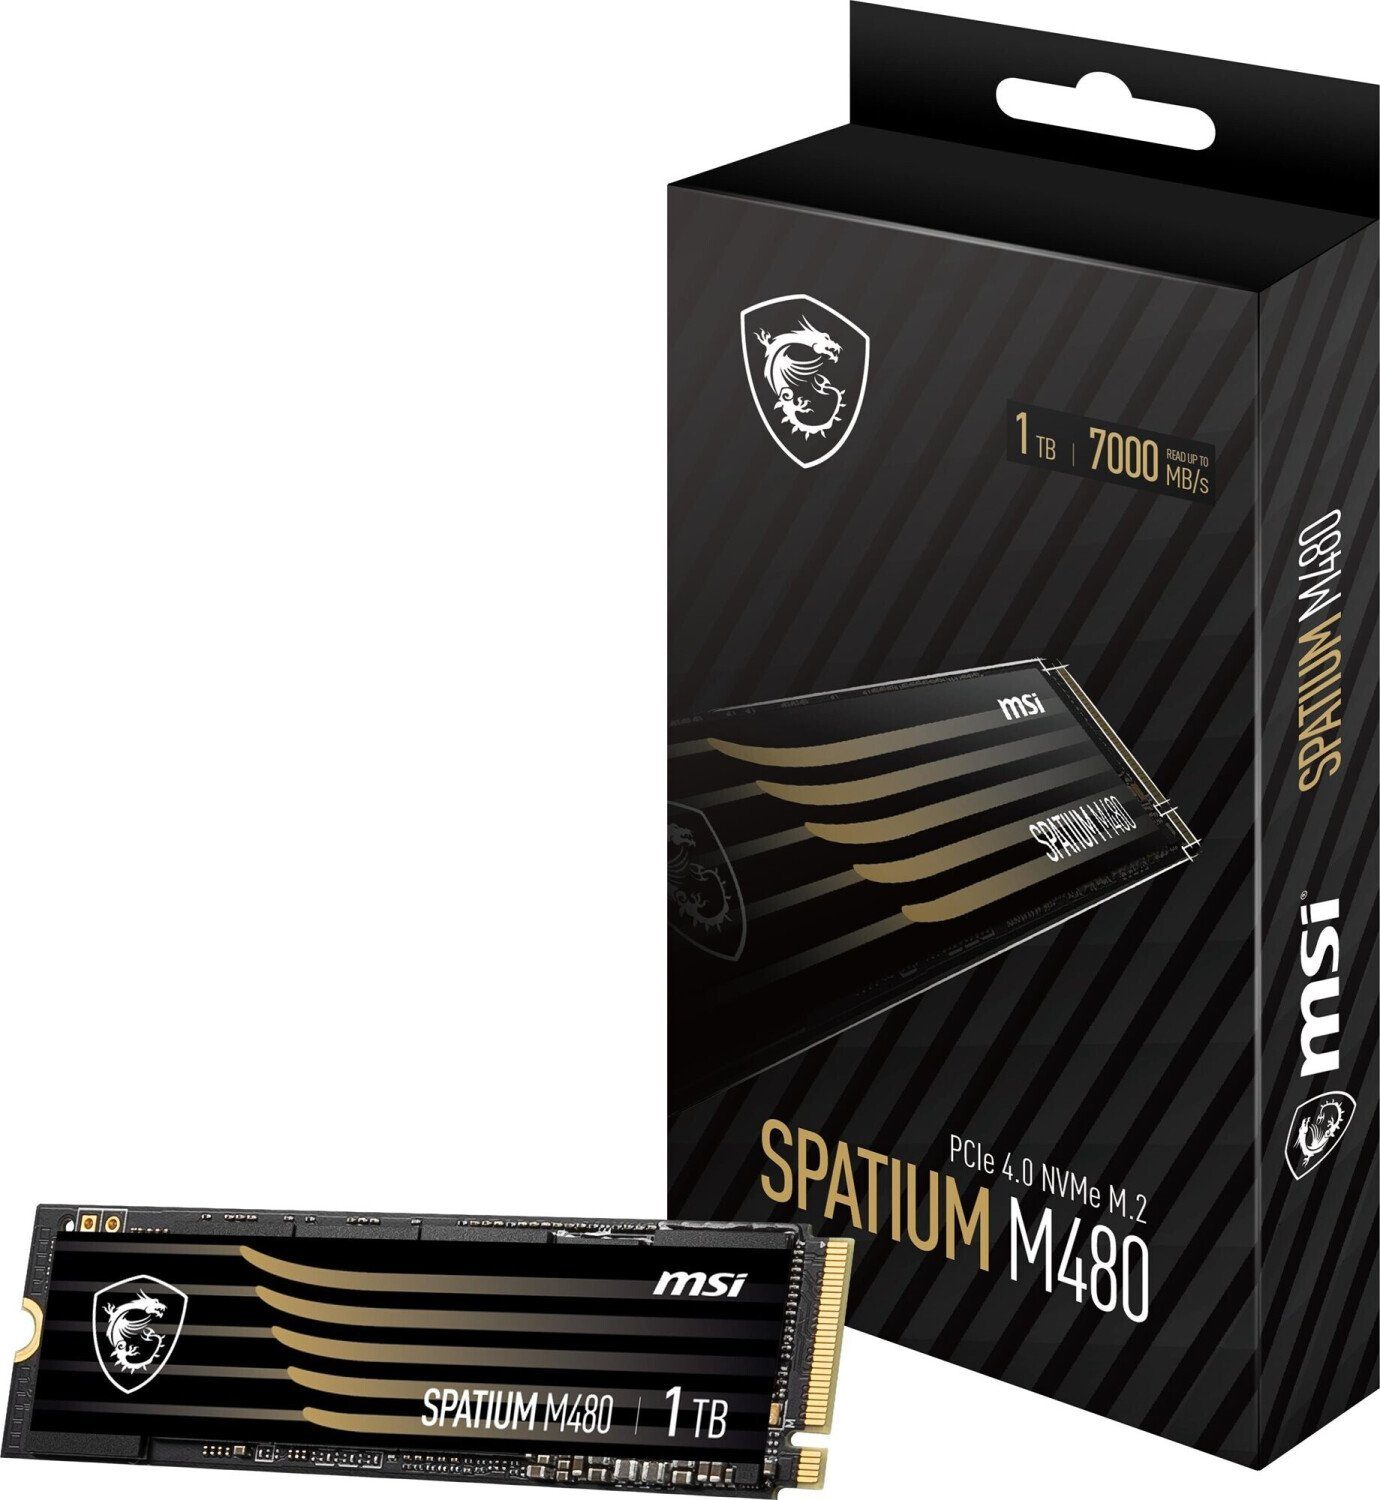 MSI SPATIUM M480 - SSD - verschlüsselt - 1 TB - PCI Express 4.0 x4 (NVMe) Gaming-SSD